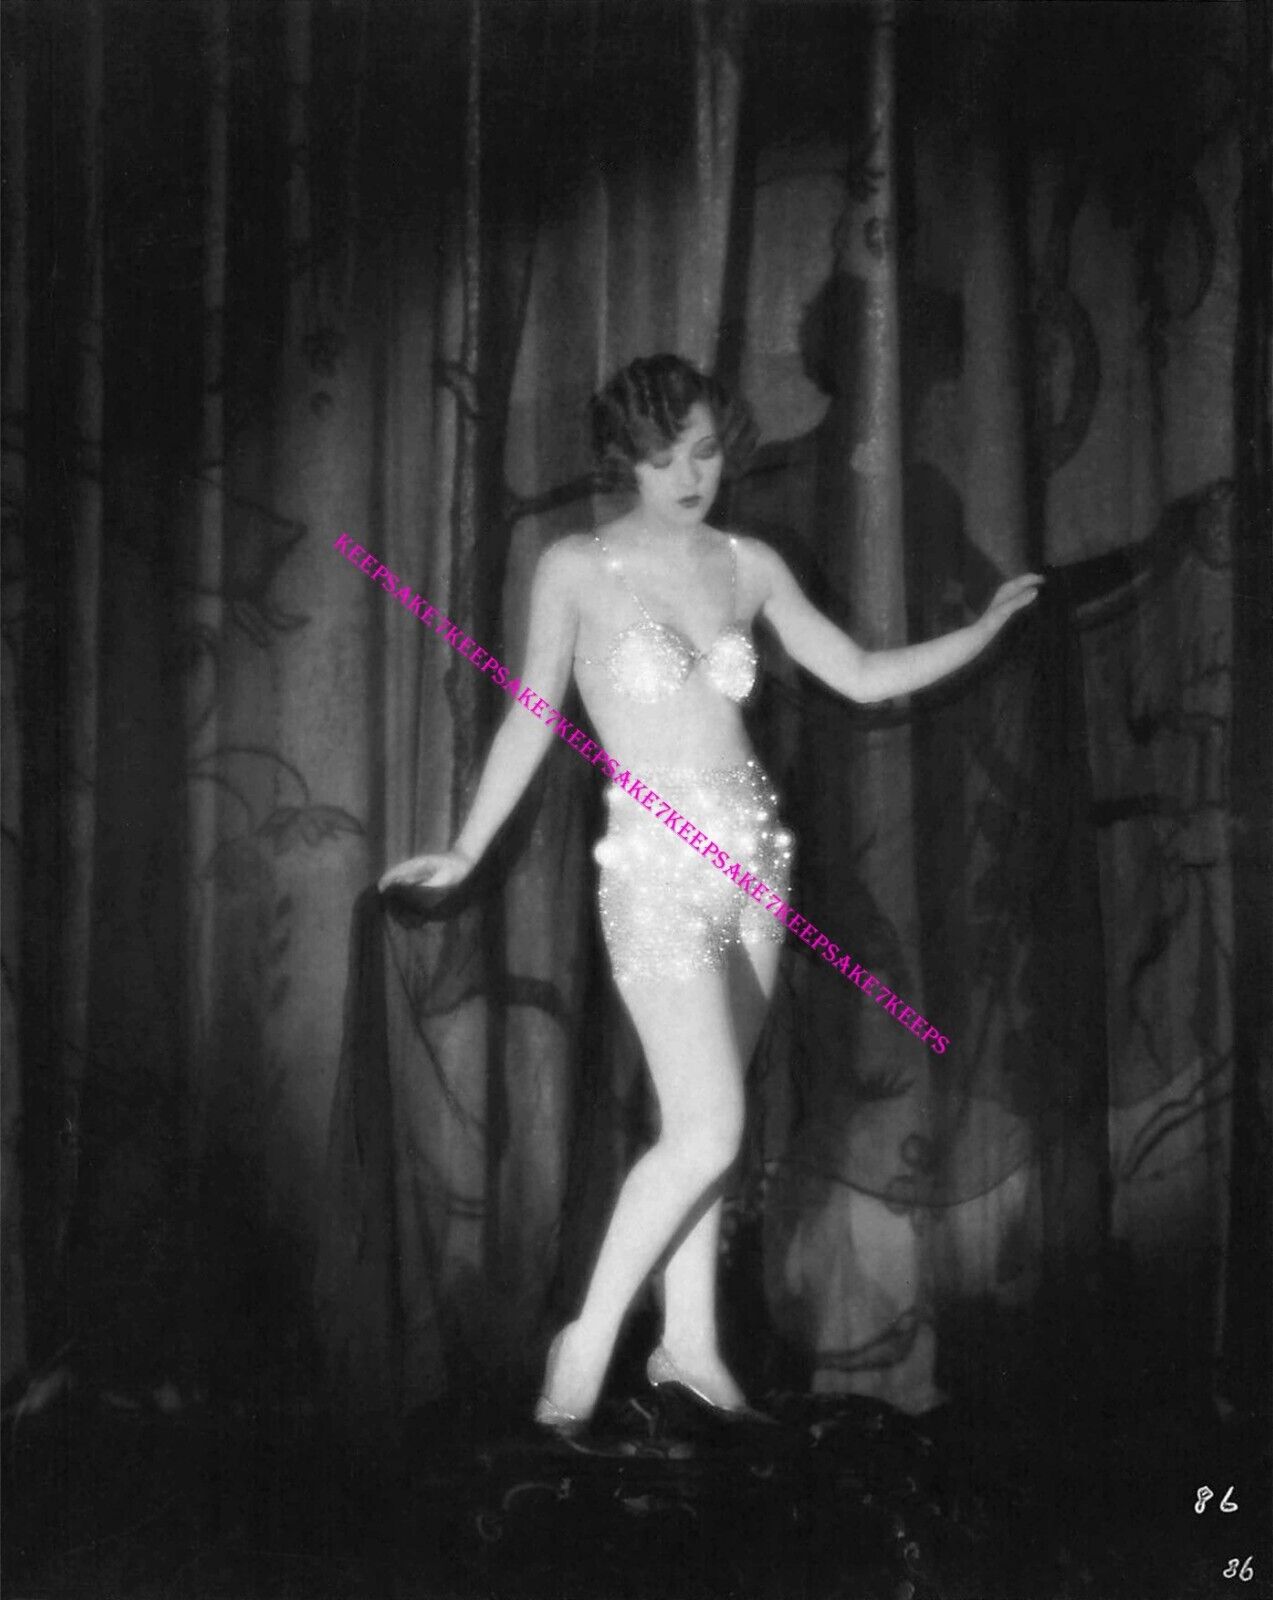 ZIEGFELD GIRL AND ACTRESS DOROTHY MACKAILL RISQUÉ LEGGY 1926 PHOTO A-DMAC2